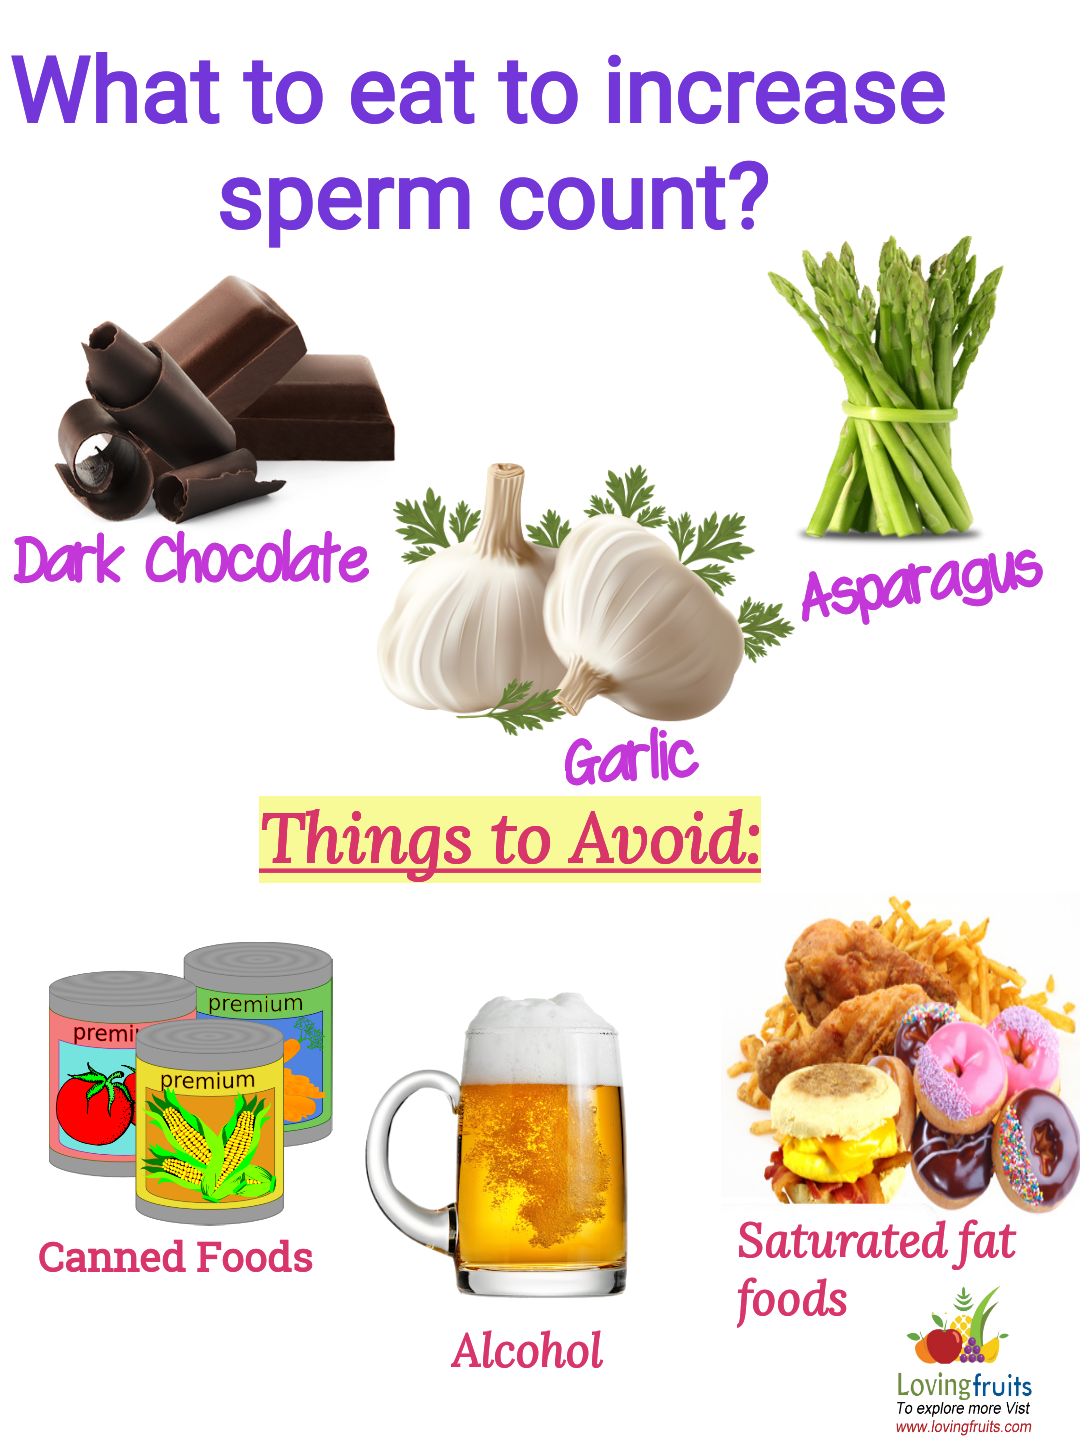 Hot C. reccomend Food helpful in increasing sperm count